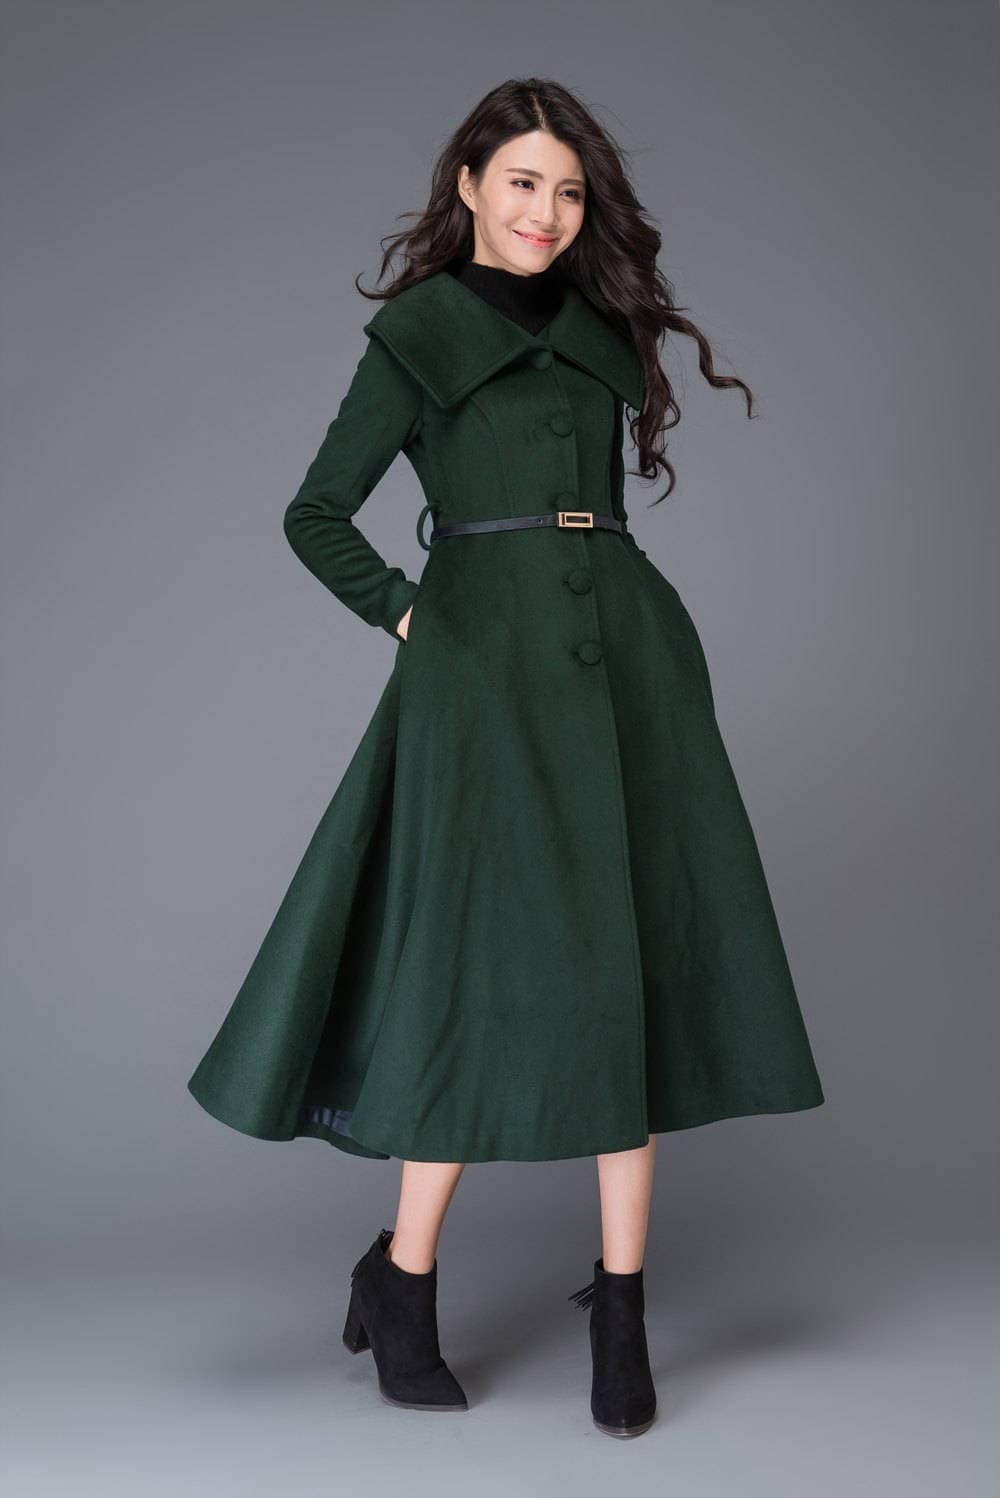 Green wool coat long wool coat winter coat womens coats | Etsy